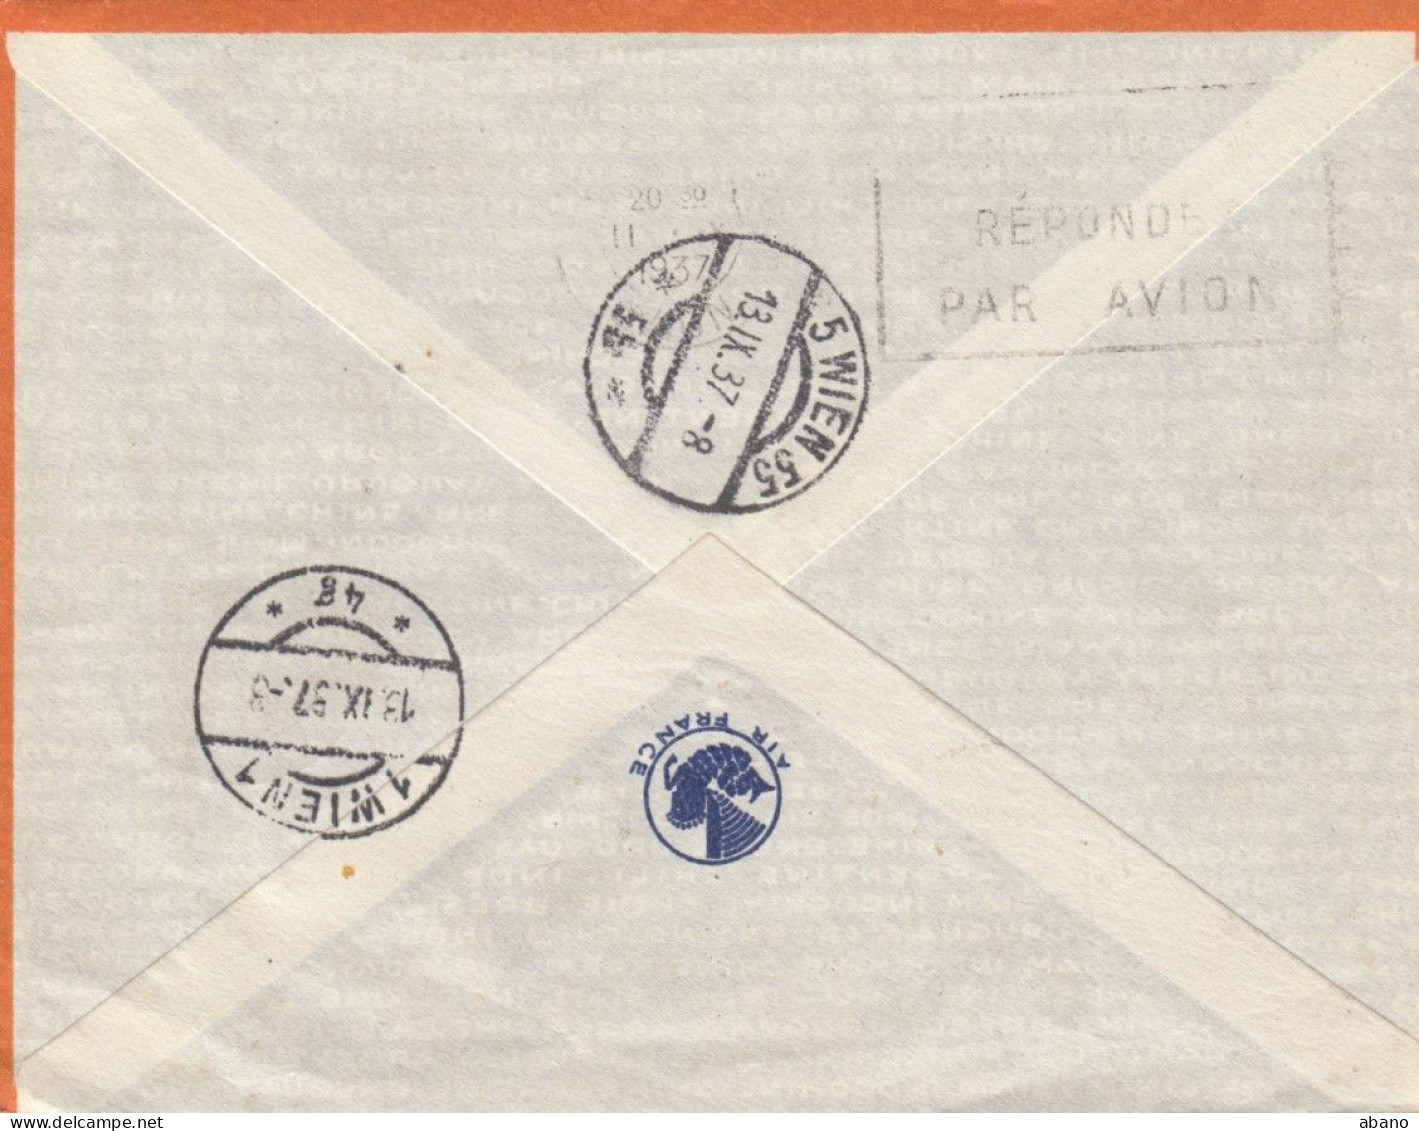 Frankreich 1936 Par Avion Flugpost 85 C. + 1,50 F. Brief EXPOSITION DE 1937 PARIS Nach Wien !!! - Cartas & Documentos